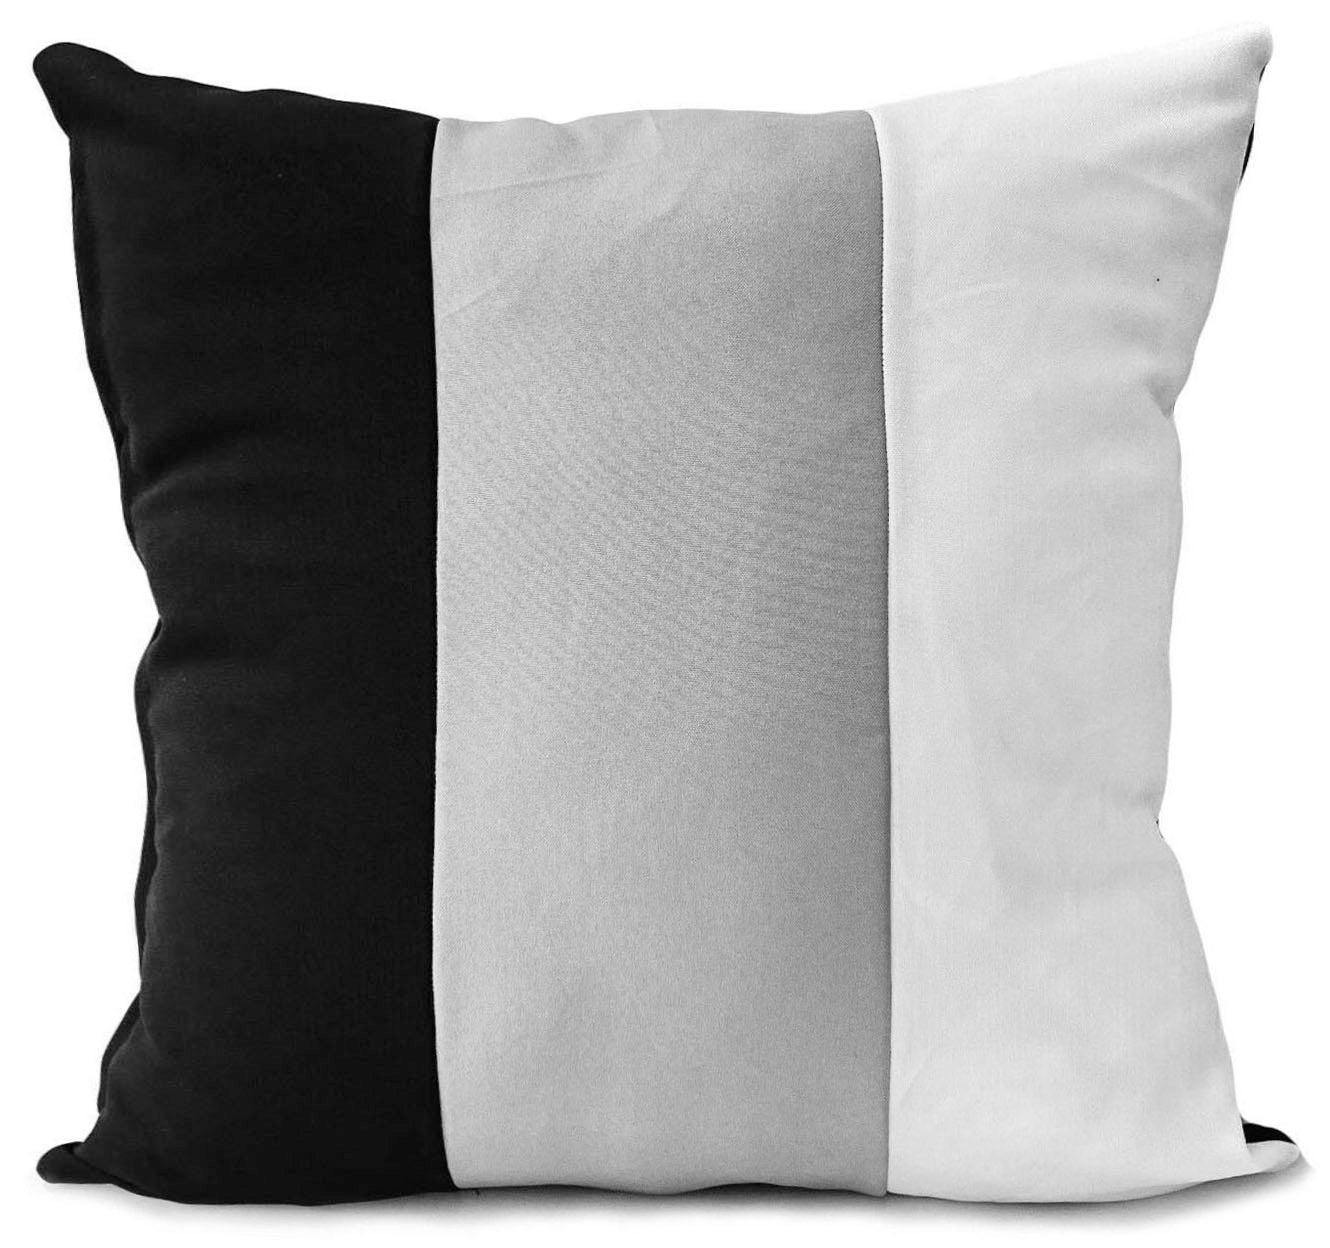 large 3 tone Striped cushions Black Grey White